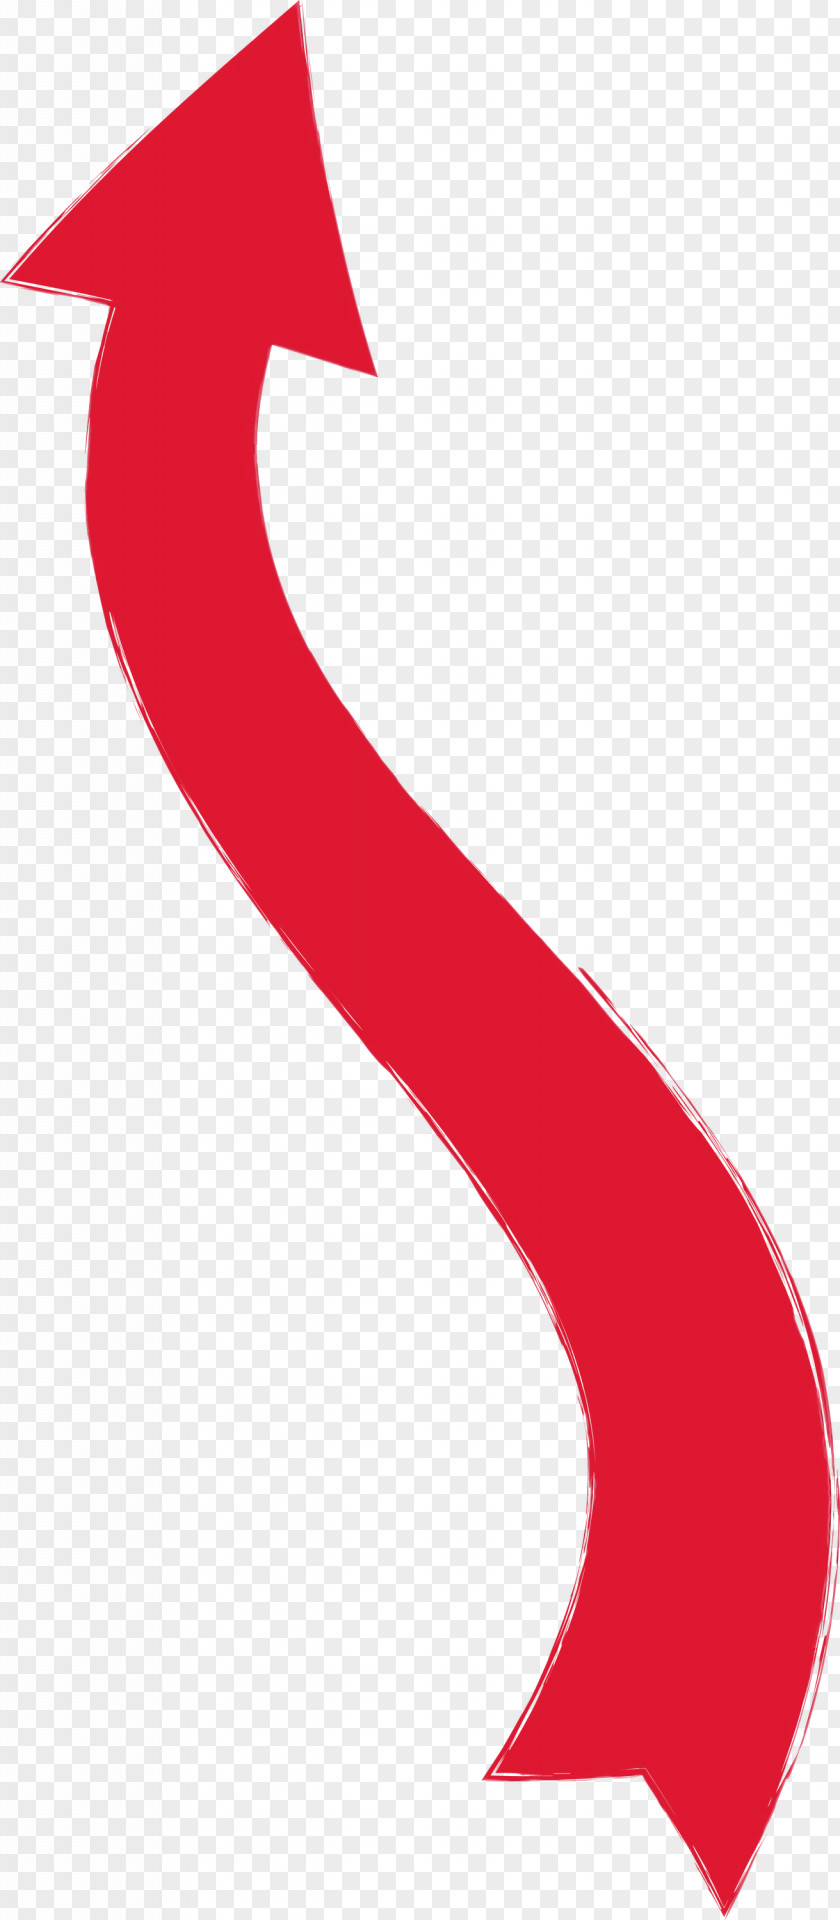 Red Material Property Symbol PNG